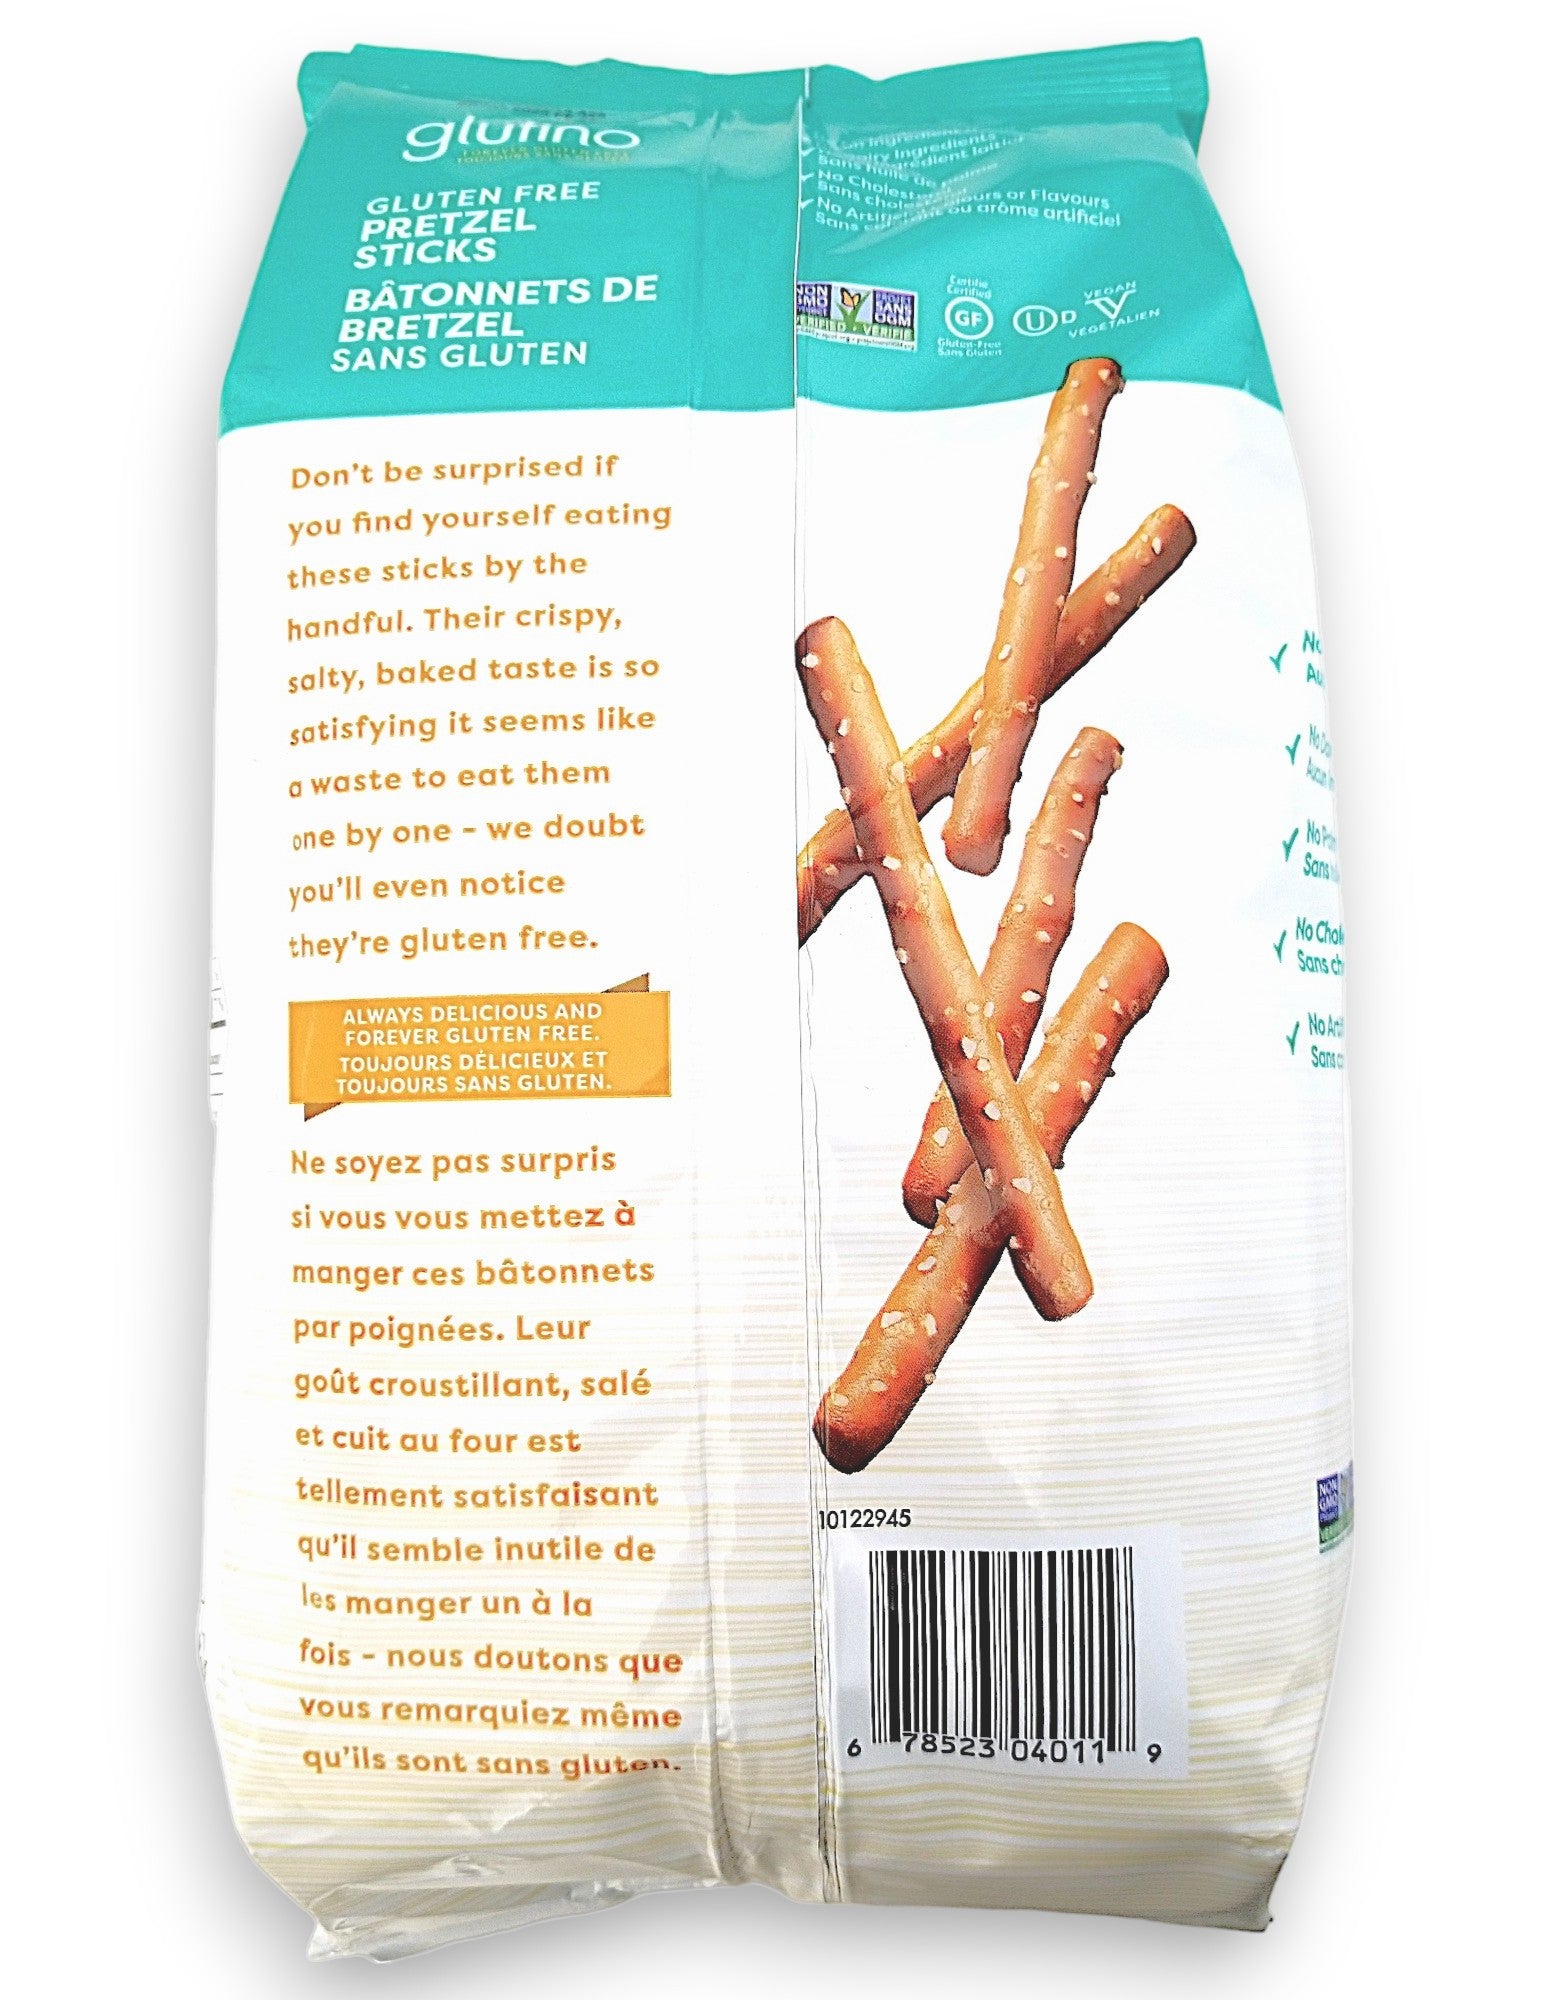 Glutino Gluten Free Pretzel Sticks, back of bag